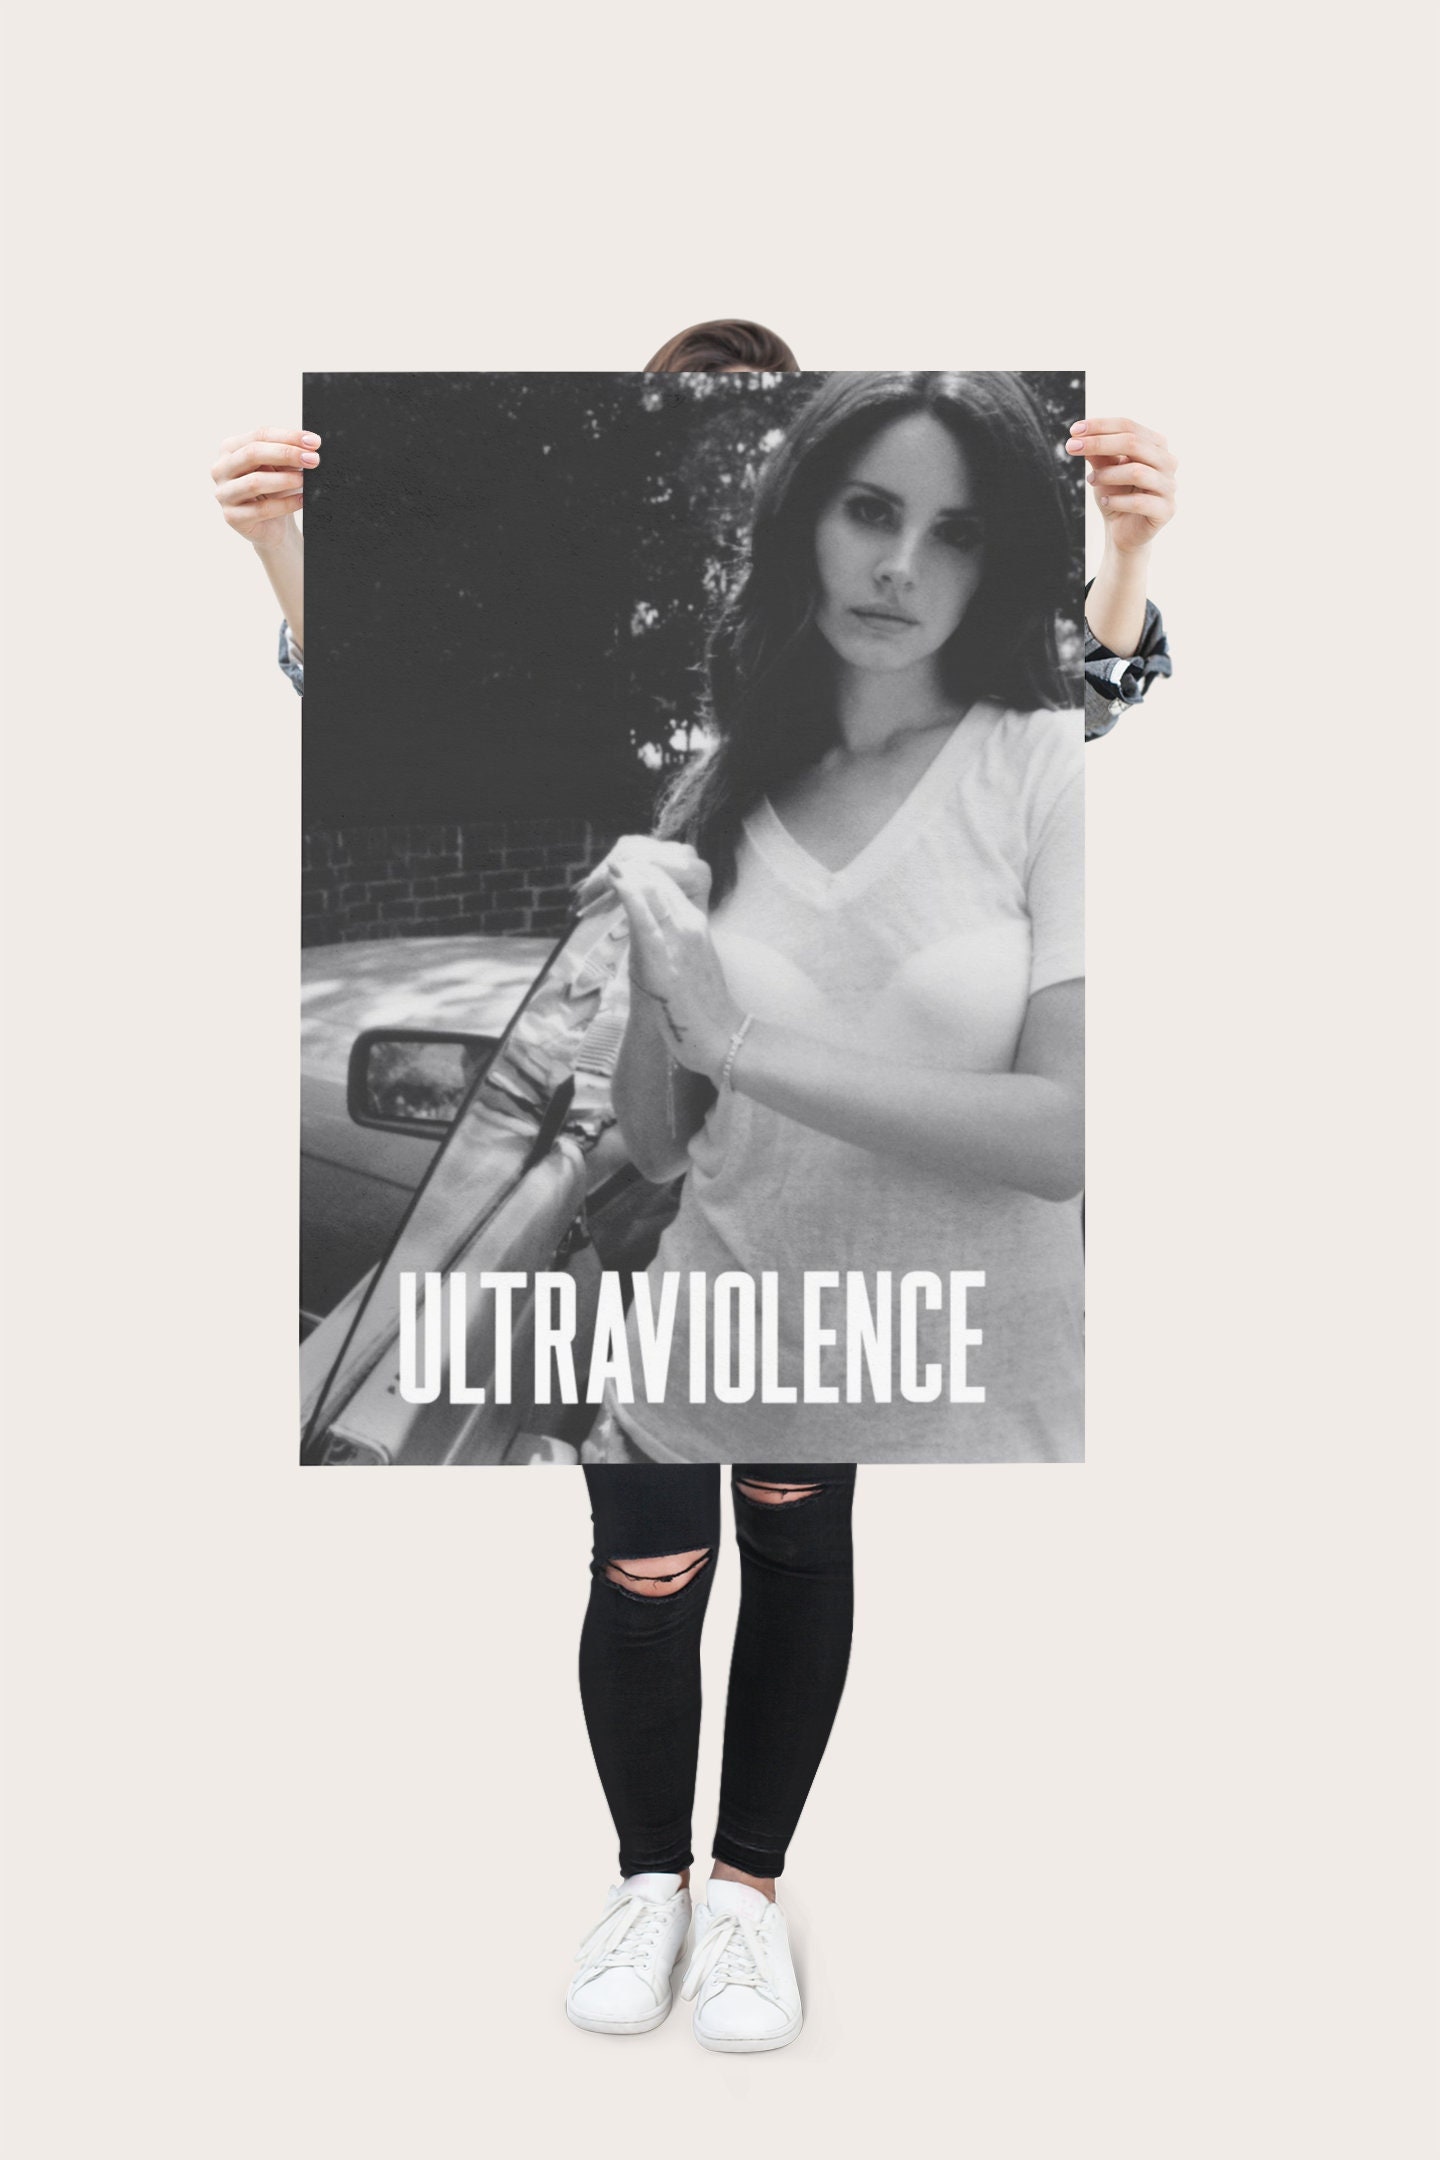 Lana Del Rey - Ultraviolence / Poster